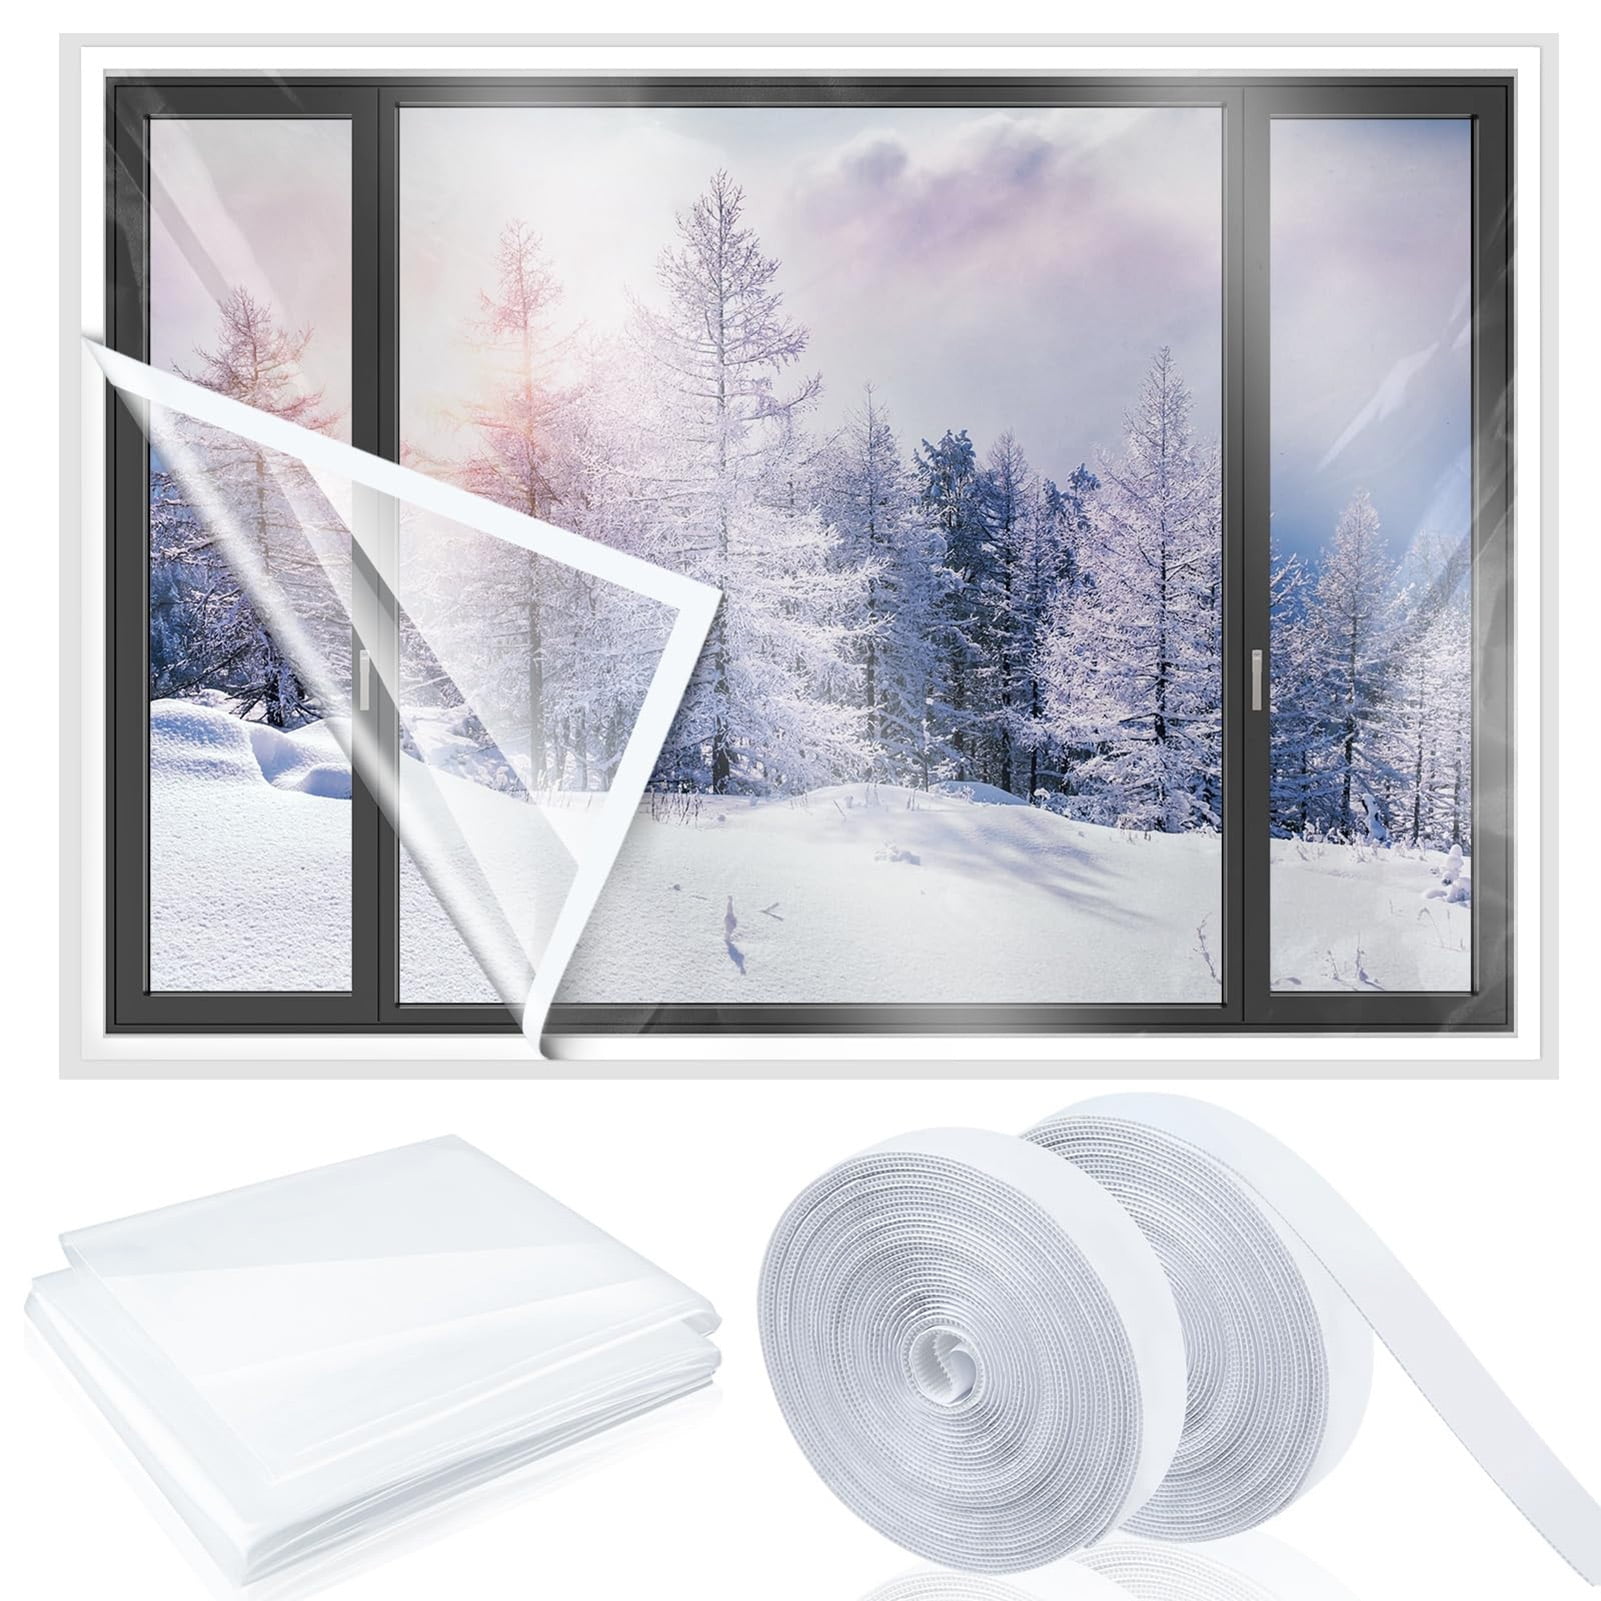 Wirlsweal Winter Windproof Window Insulation Kit Window Insulation Film Winter Windproof Thermal Indoor Plastic Curtain Window Insulation Kit